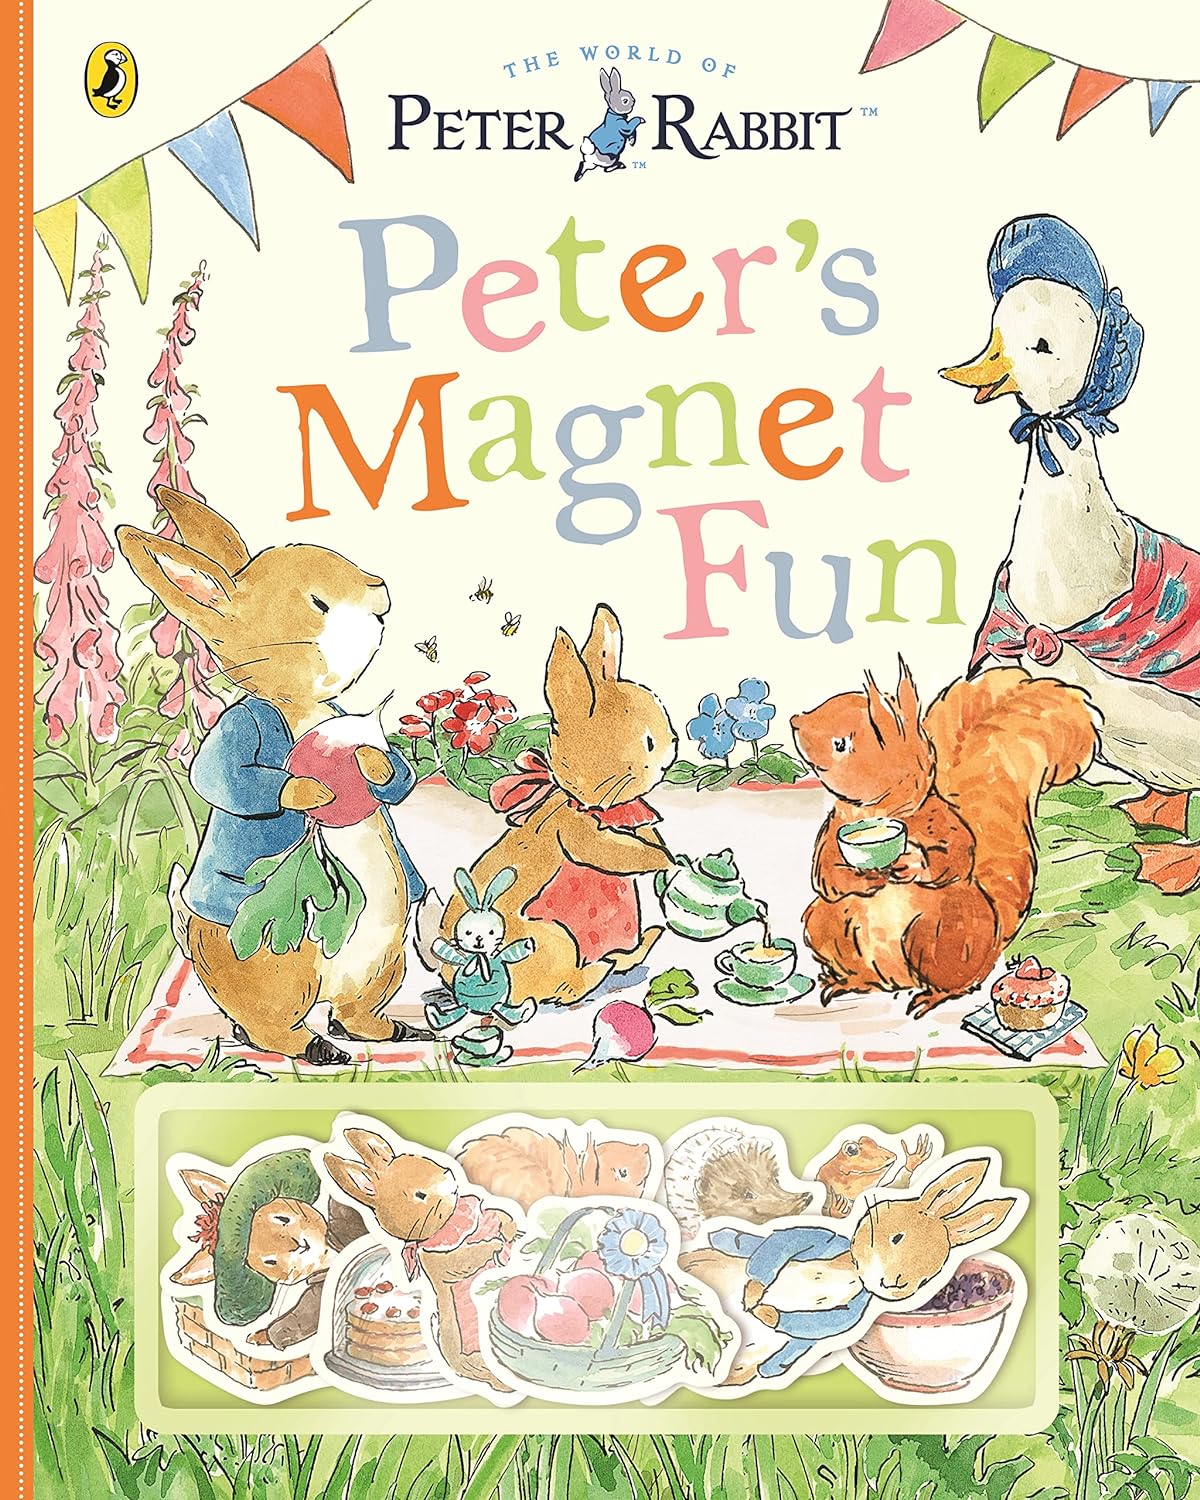 Peter Rabbit - Peter's Magnet Fun